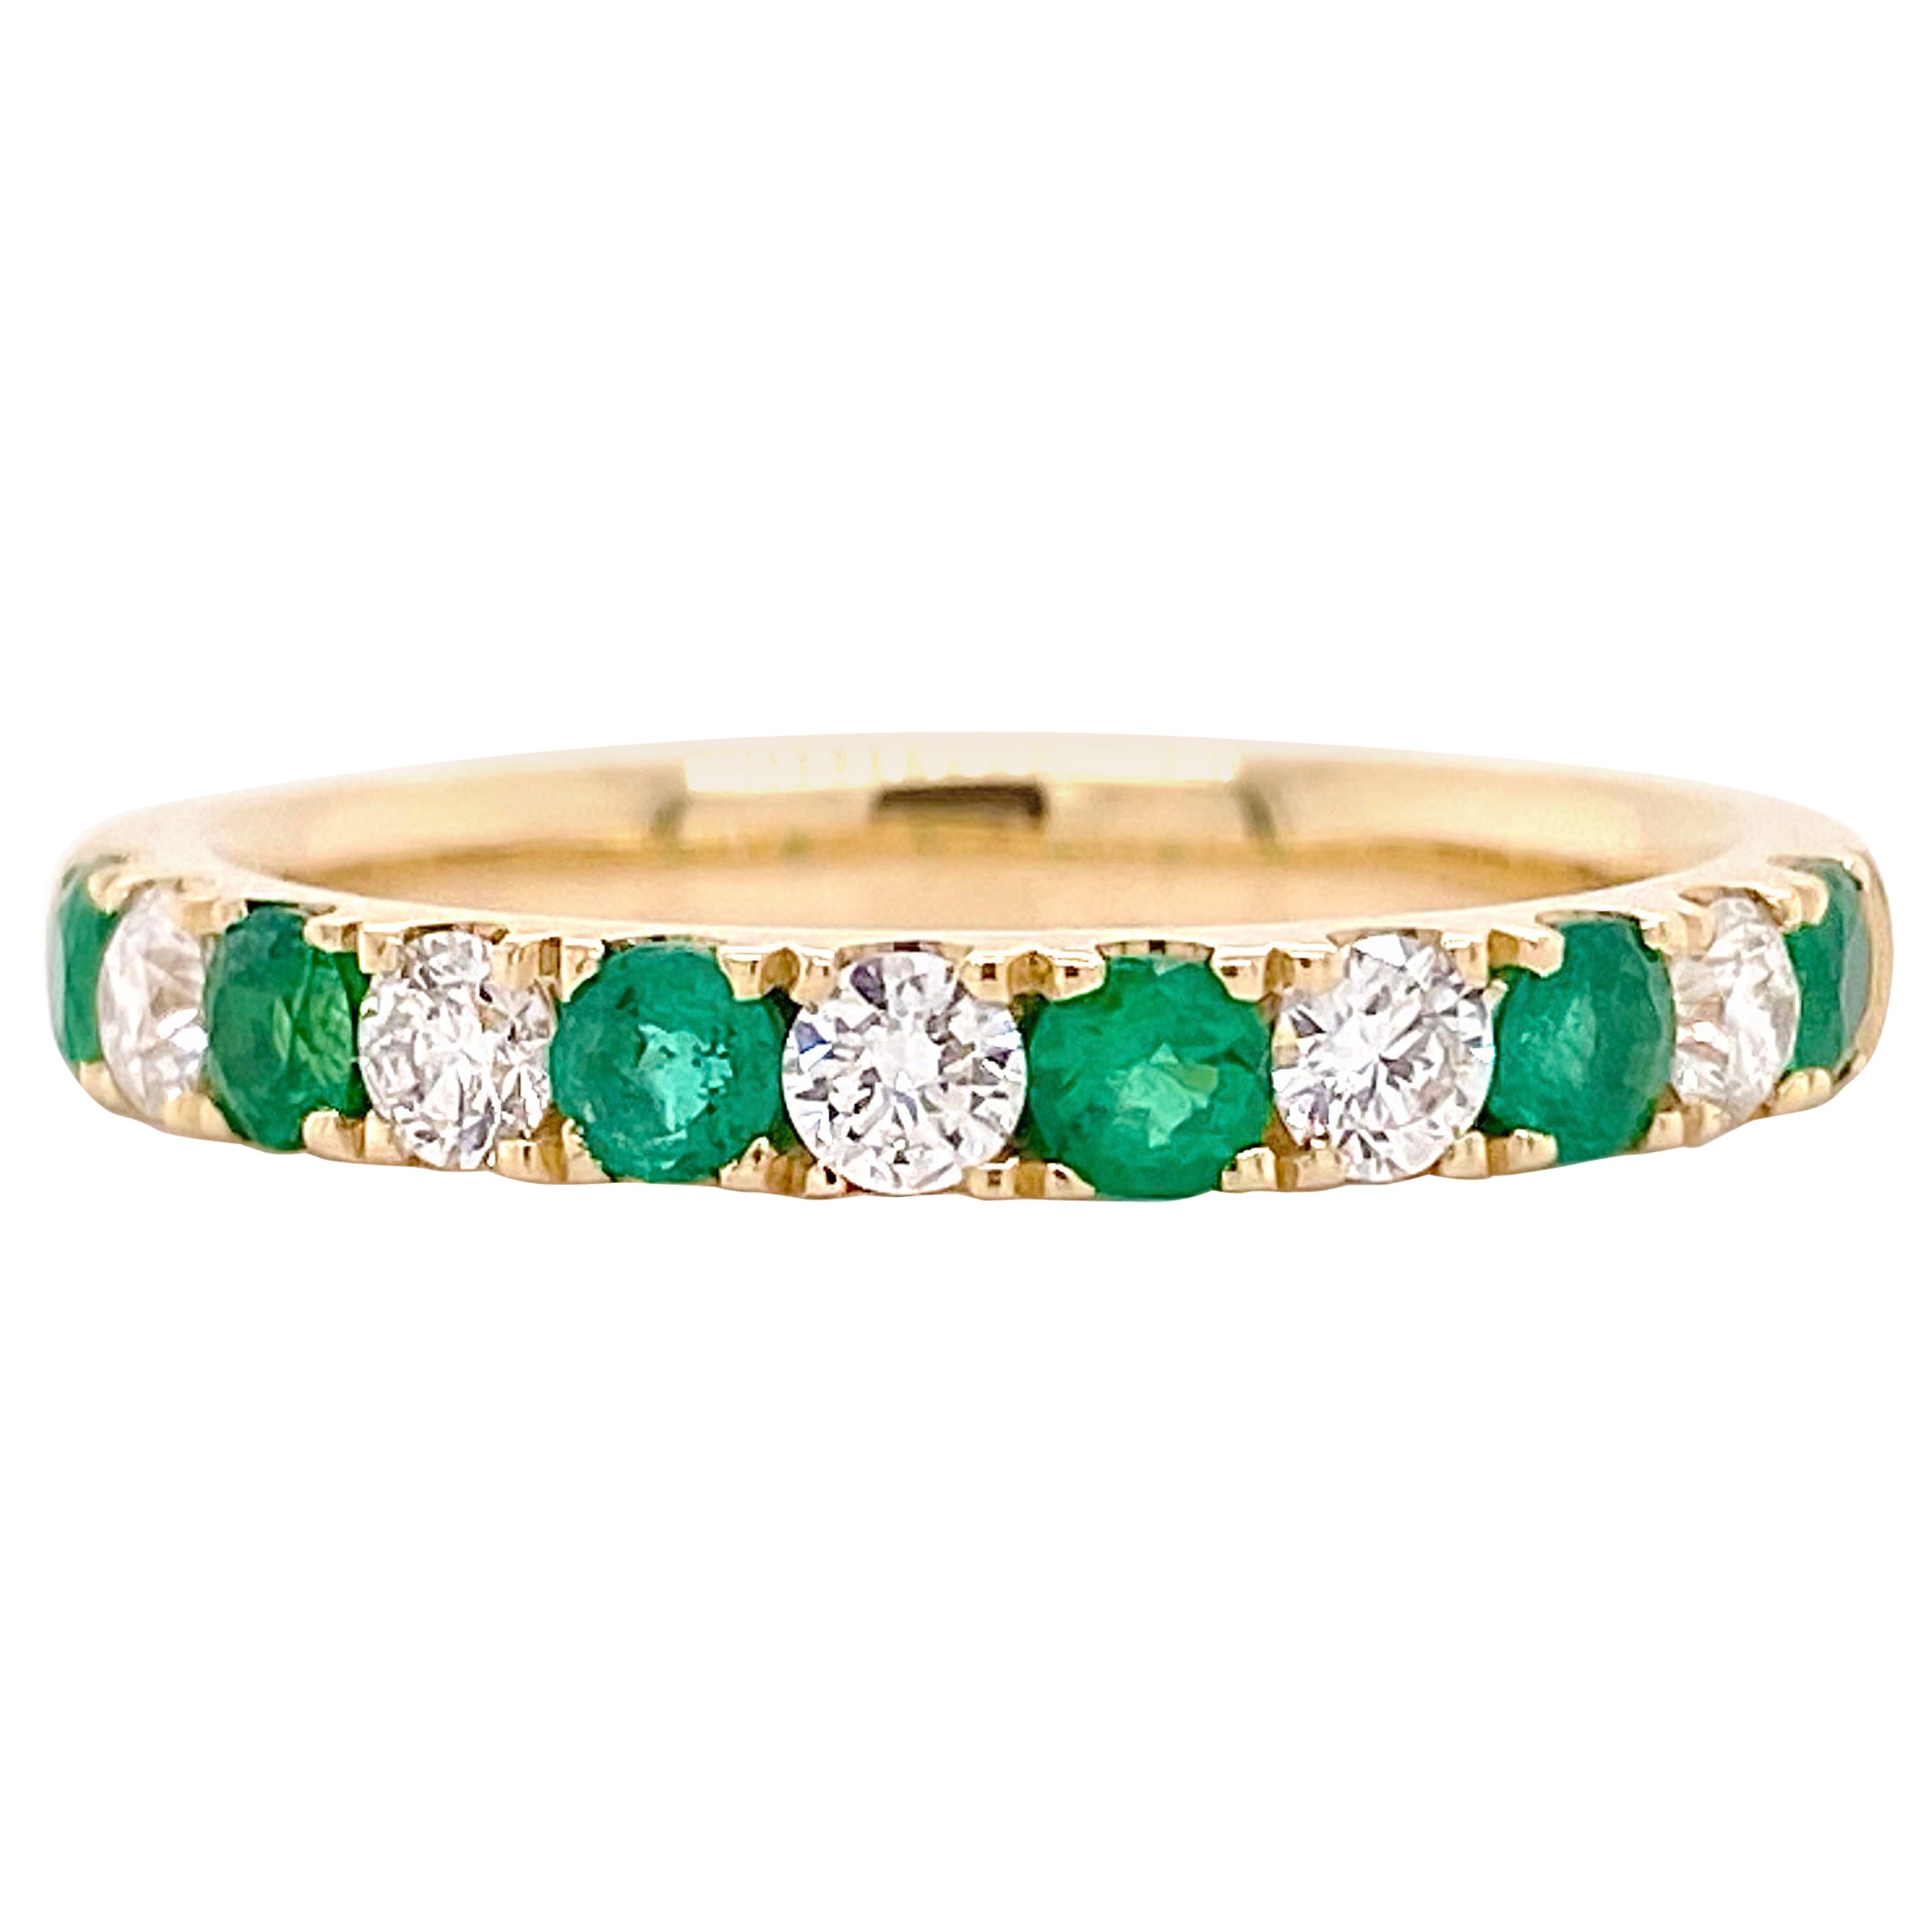 Diamond Emerald Band, Yellow Gold Wedding Ring, Green Emeralds and White Diamond